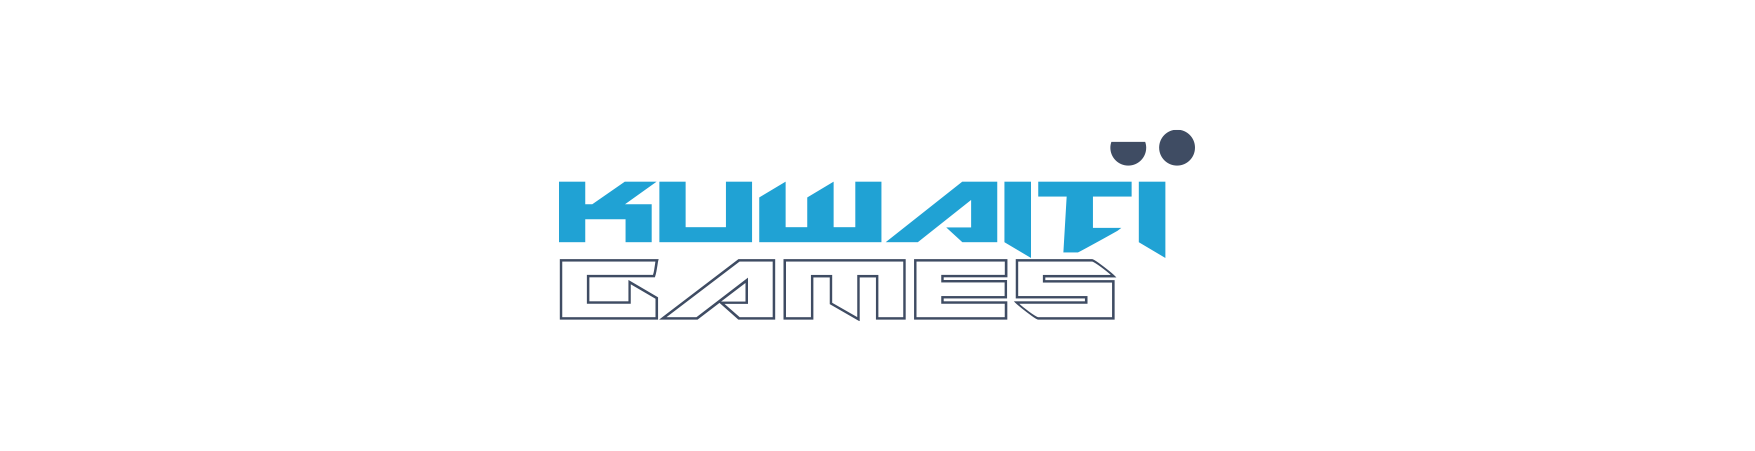 Kuwaiti Games